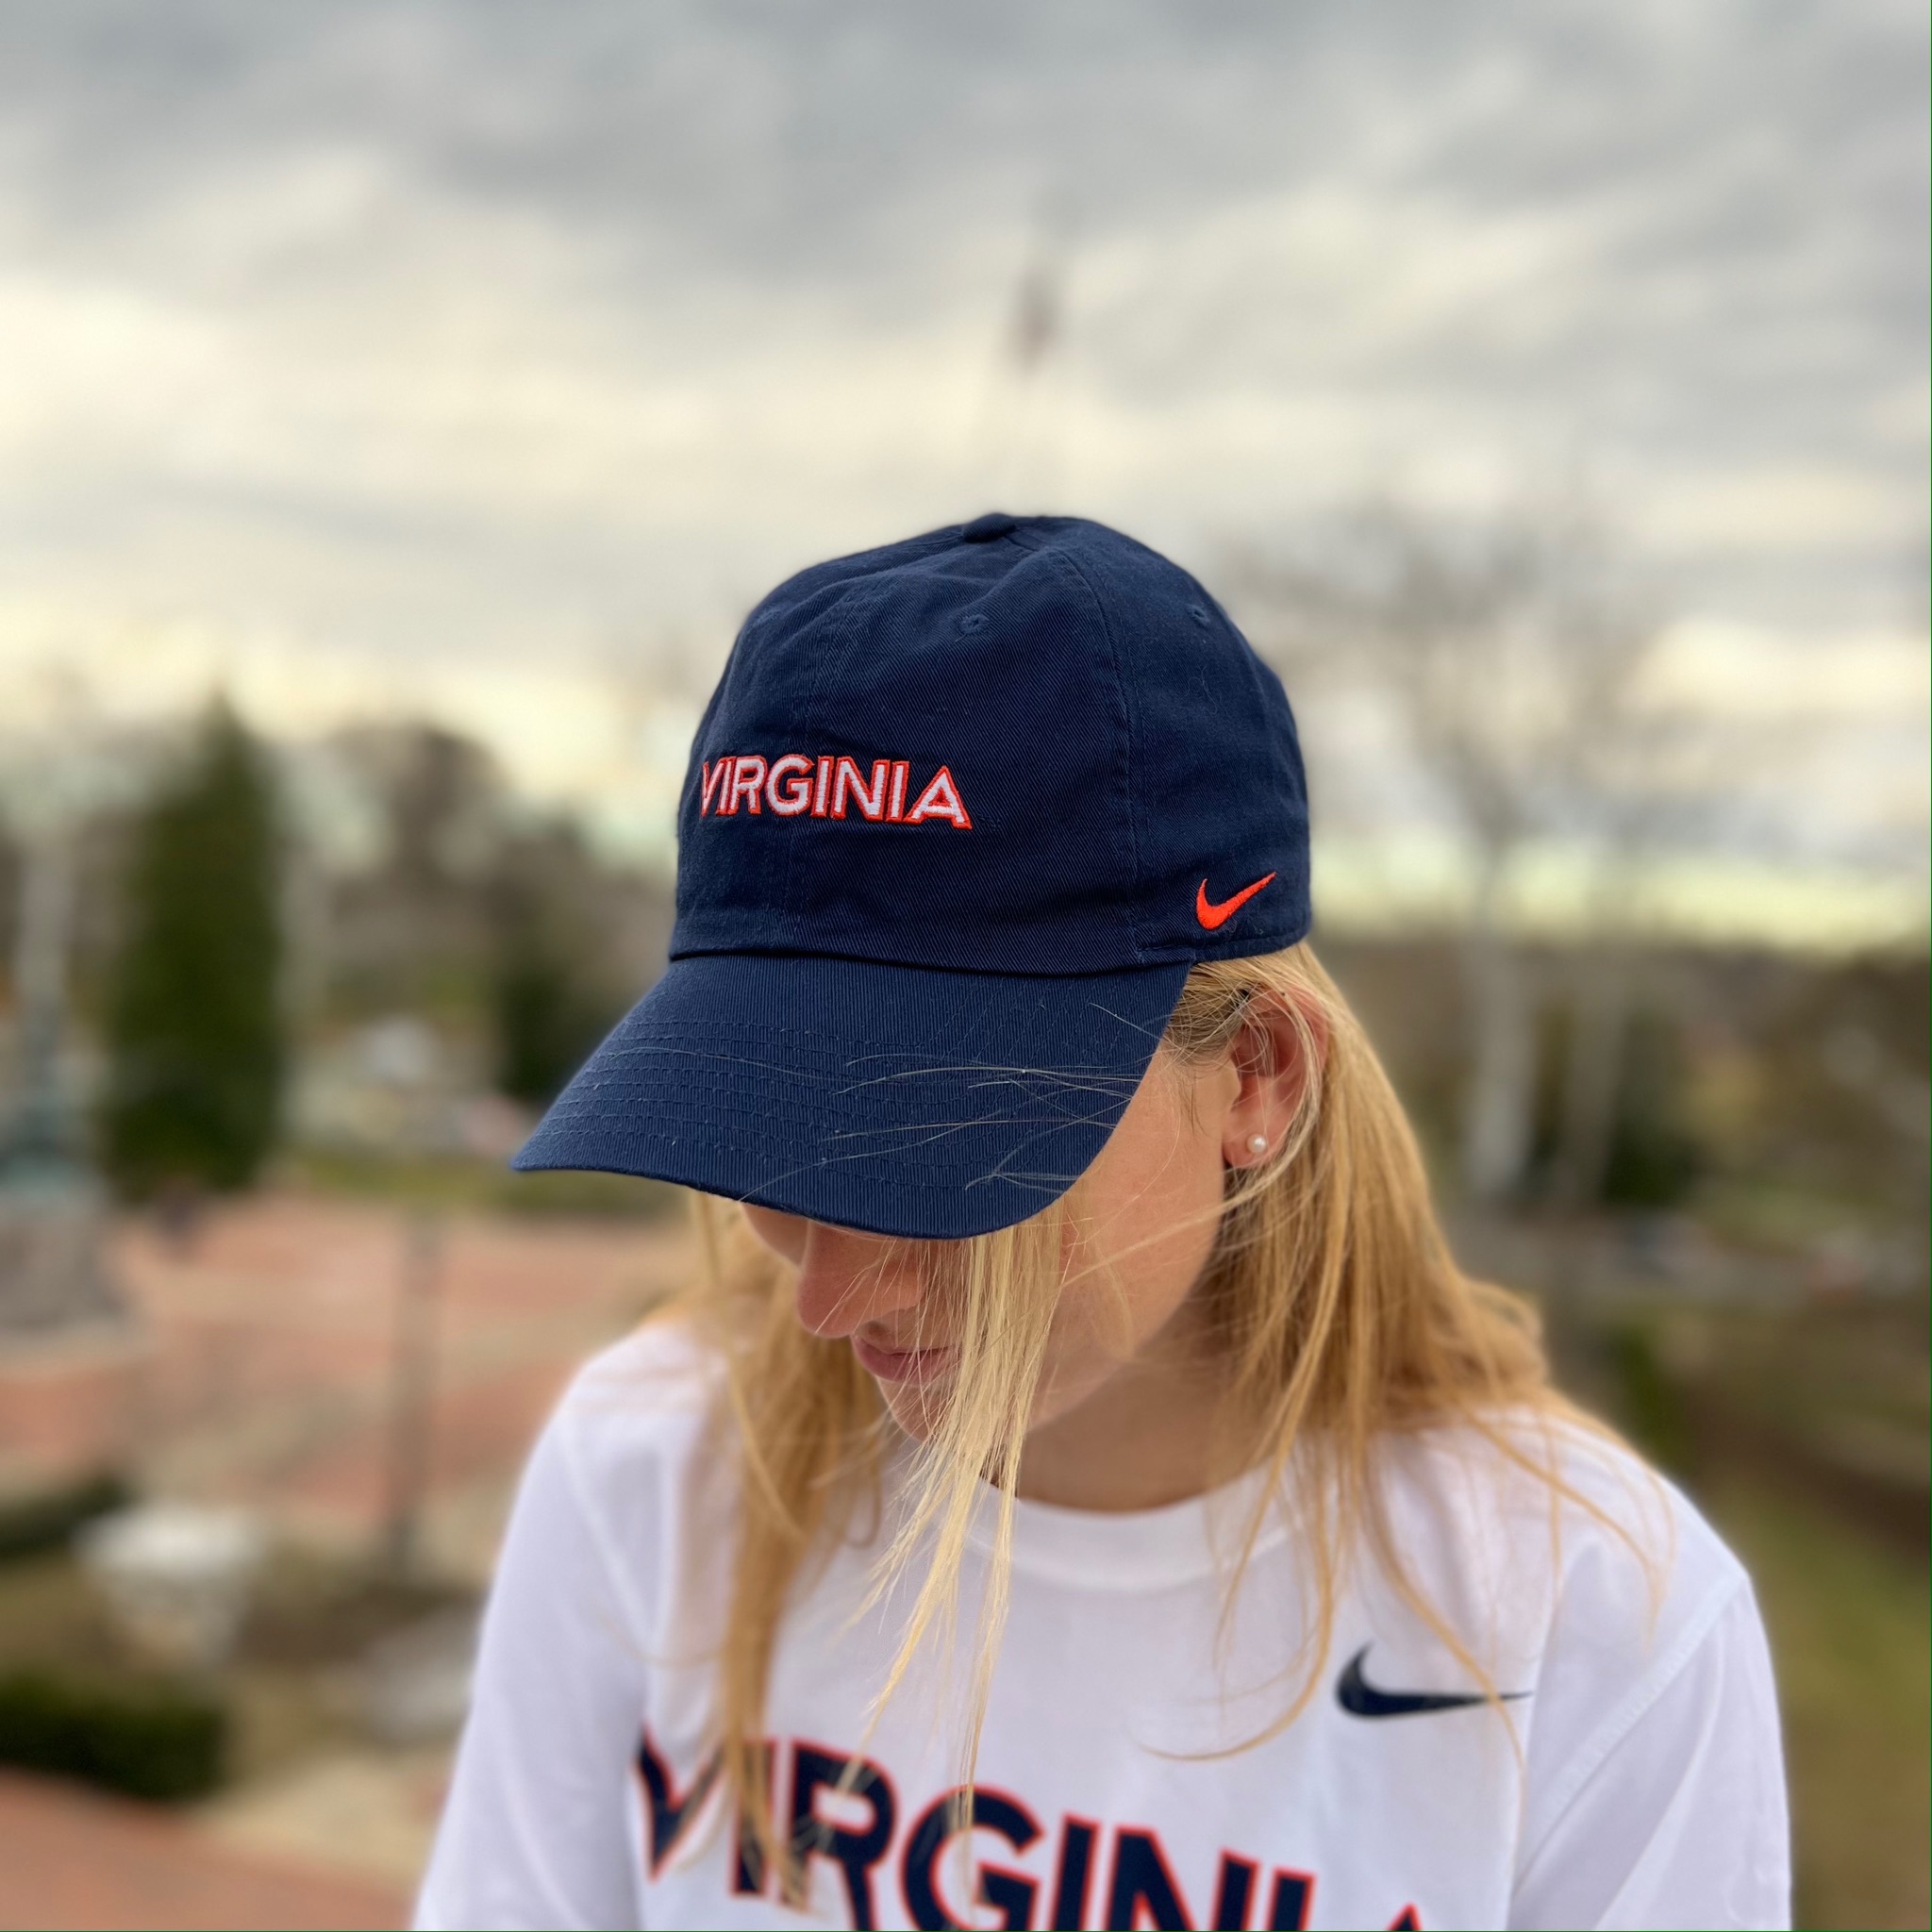 Mincer's on X: Everyone needs a classic Virginia baseball cap